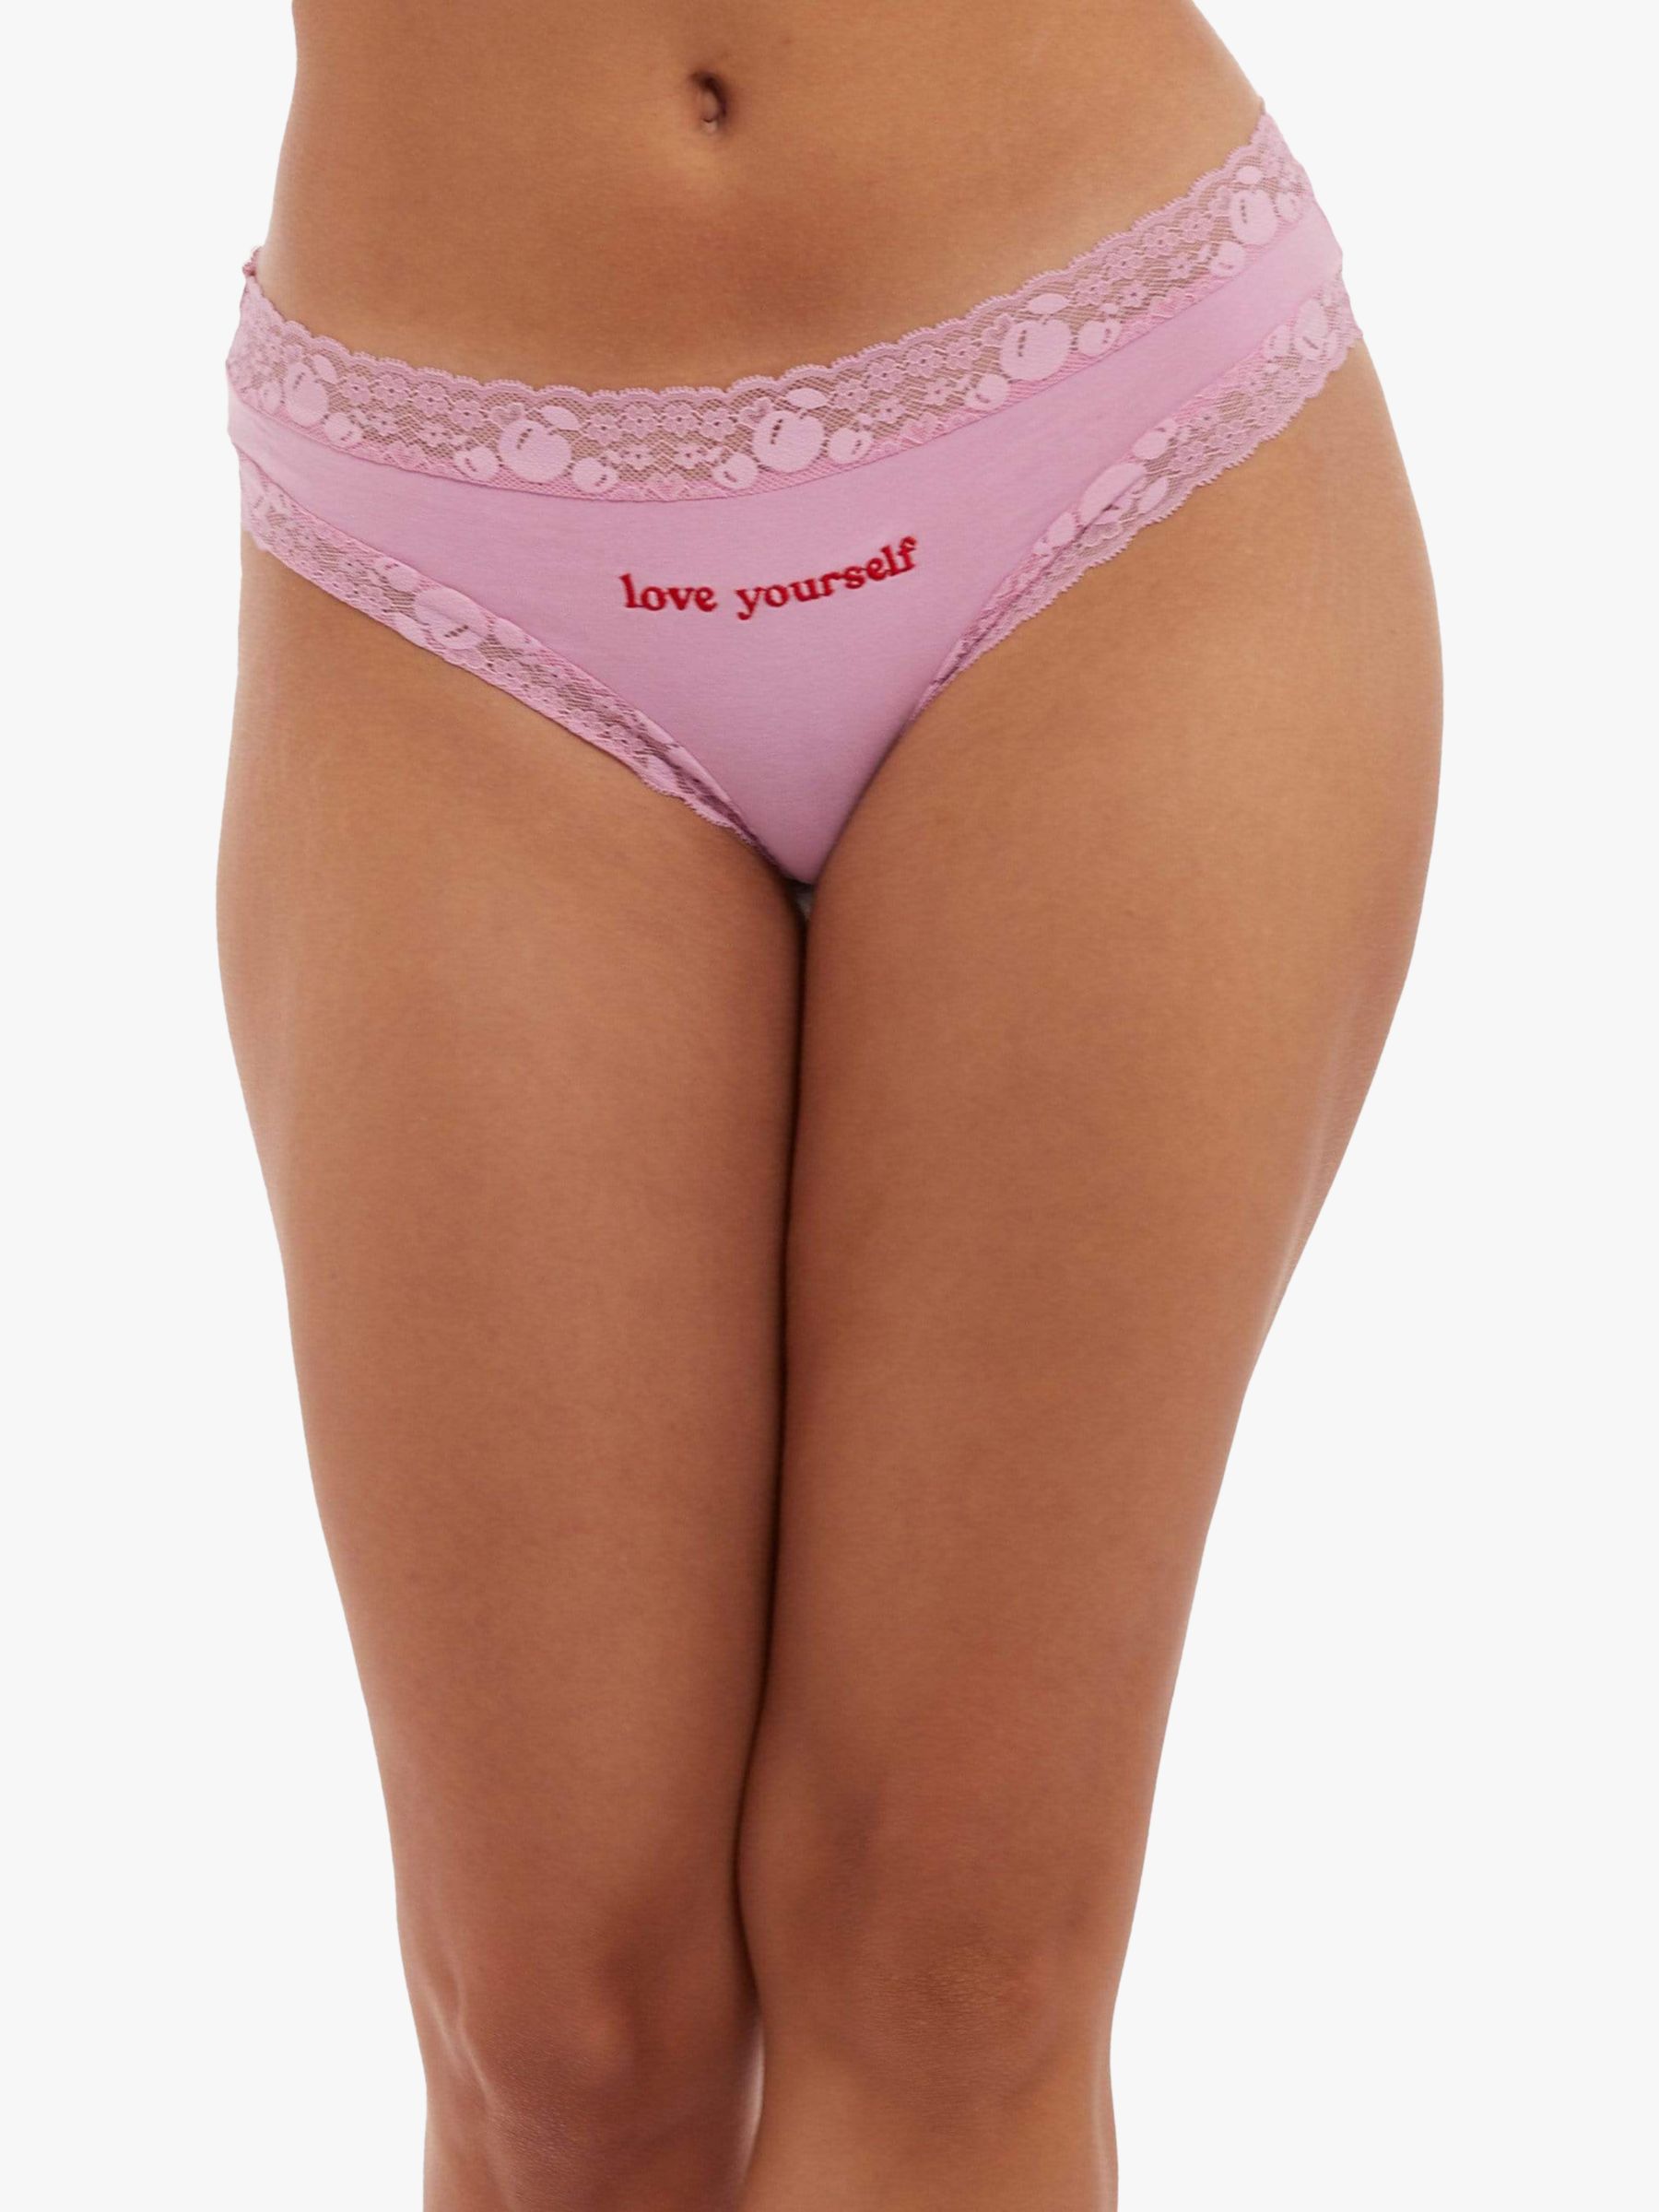 Women's Lace Sexy Hollow Open Crotch Panties Underwear Knickers